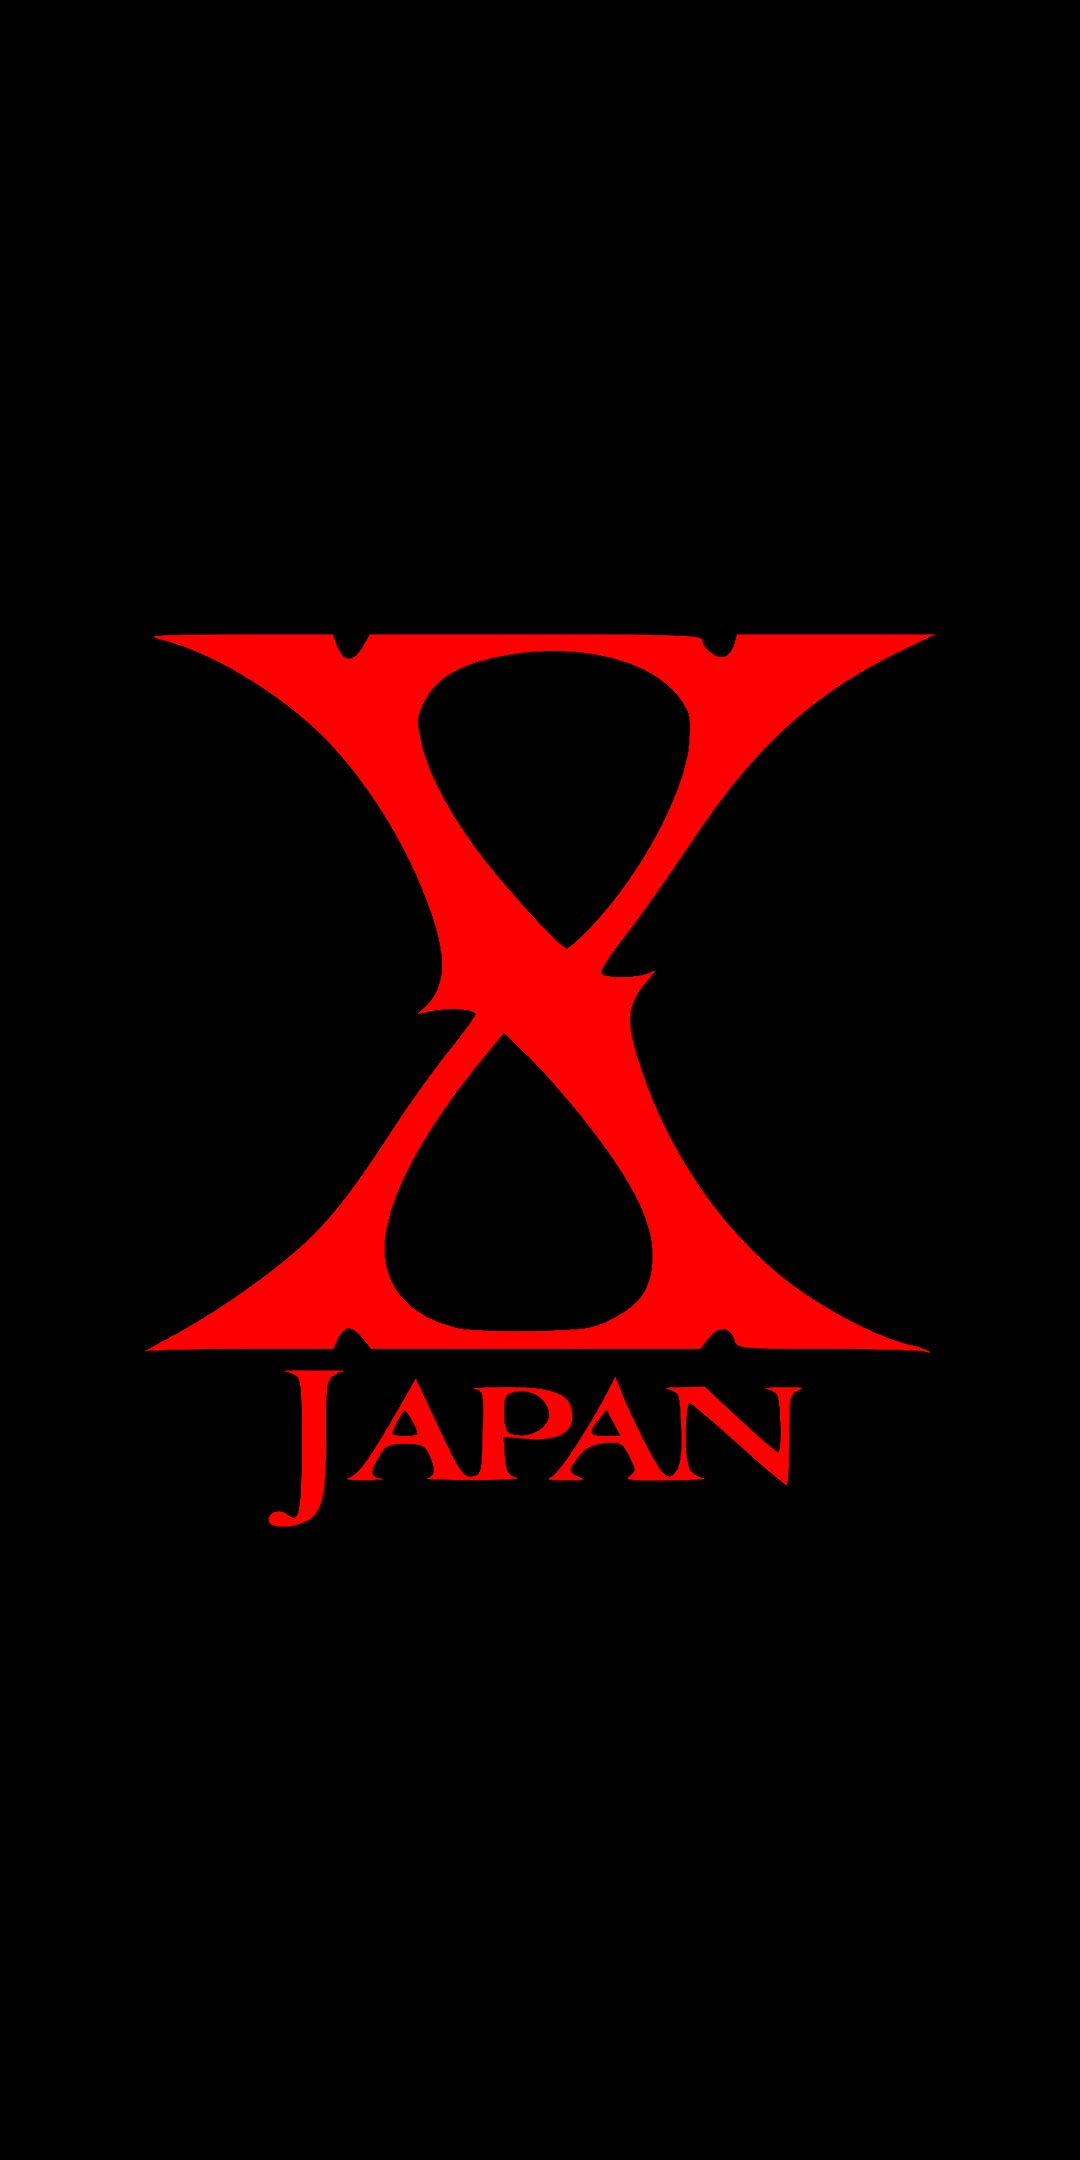 X Japan エックスジャパン ロゴ の無料待ち受け画像 スマホ壁紙 Iphone Android 1 待ち受けparadise